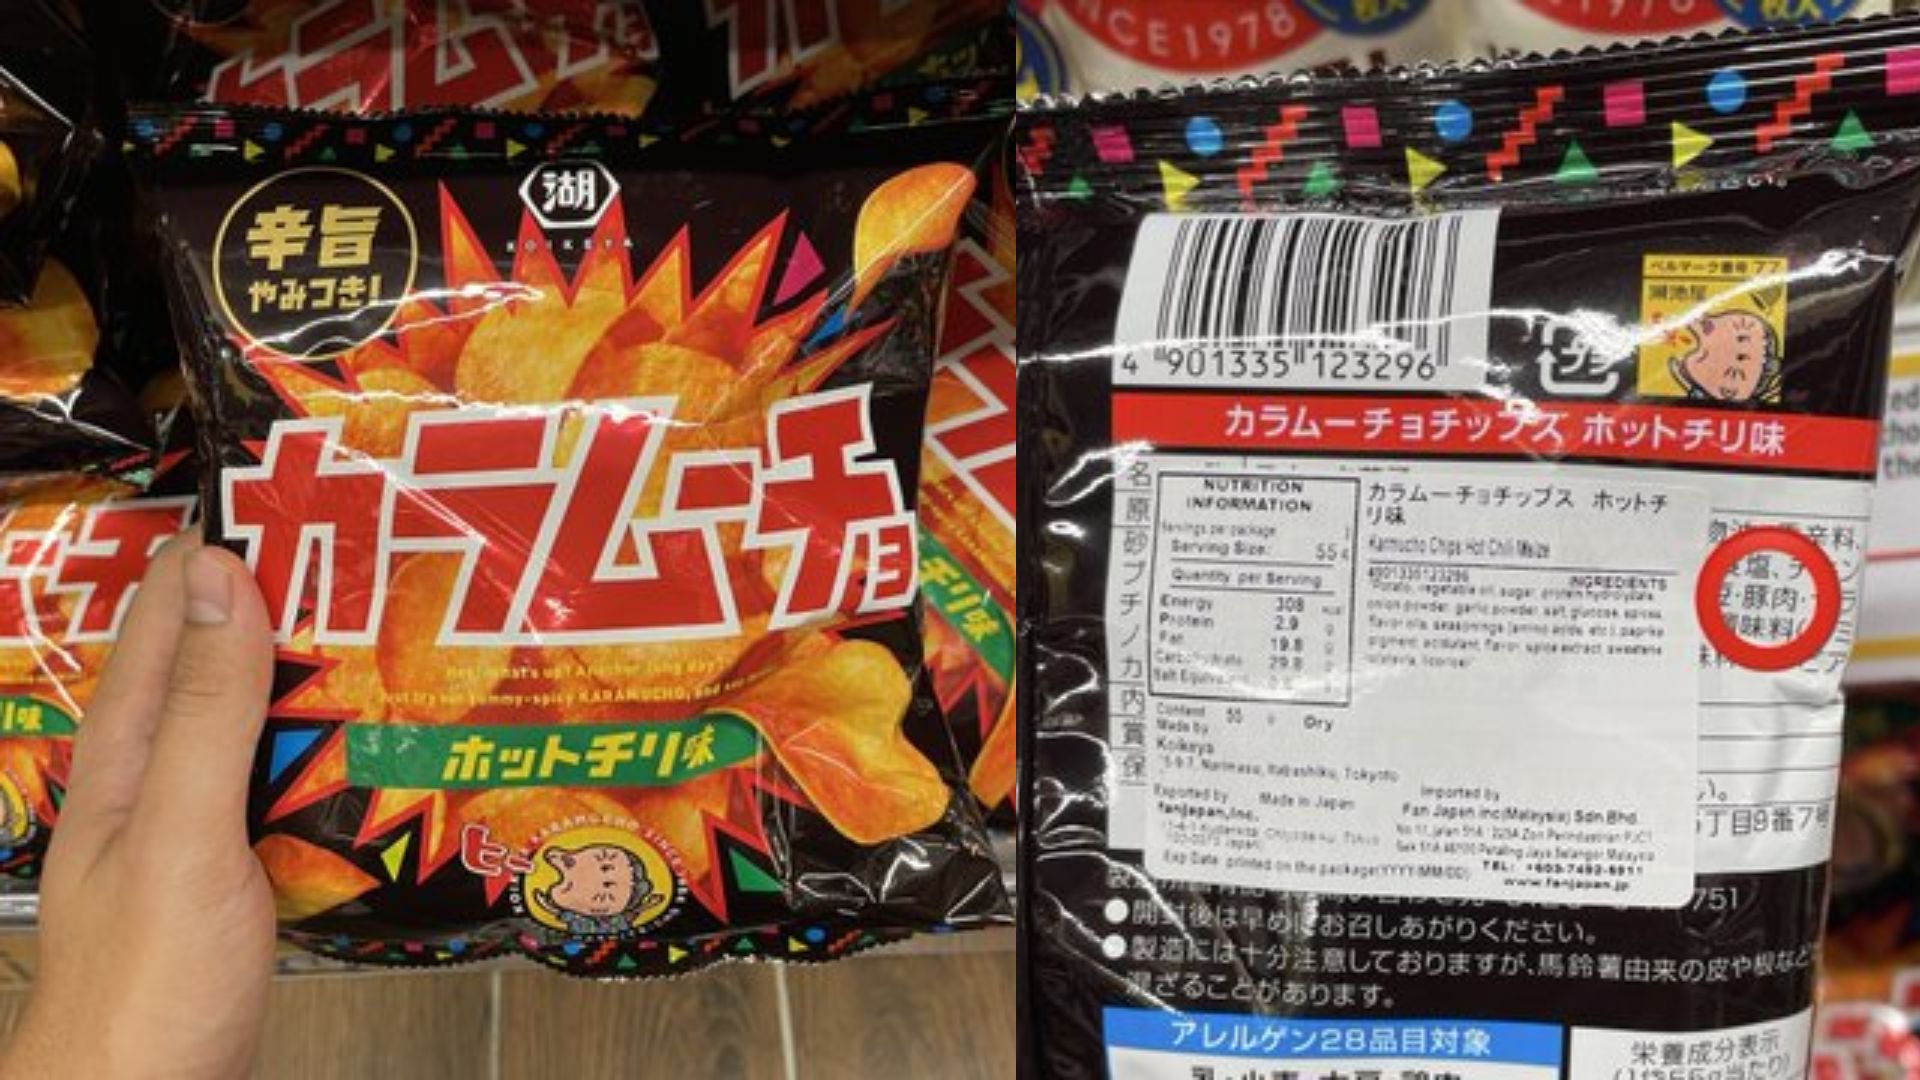 Potato Chips At Don Don Donki Taken Off The Shelves After Tweet Reveals Missing Ingredients